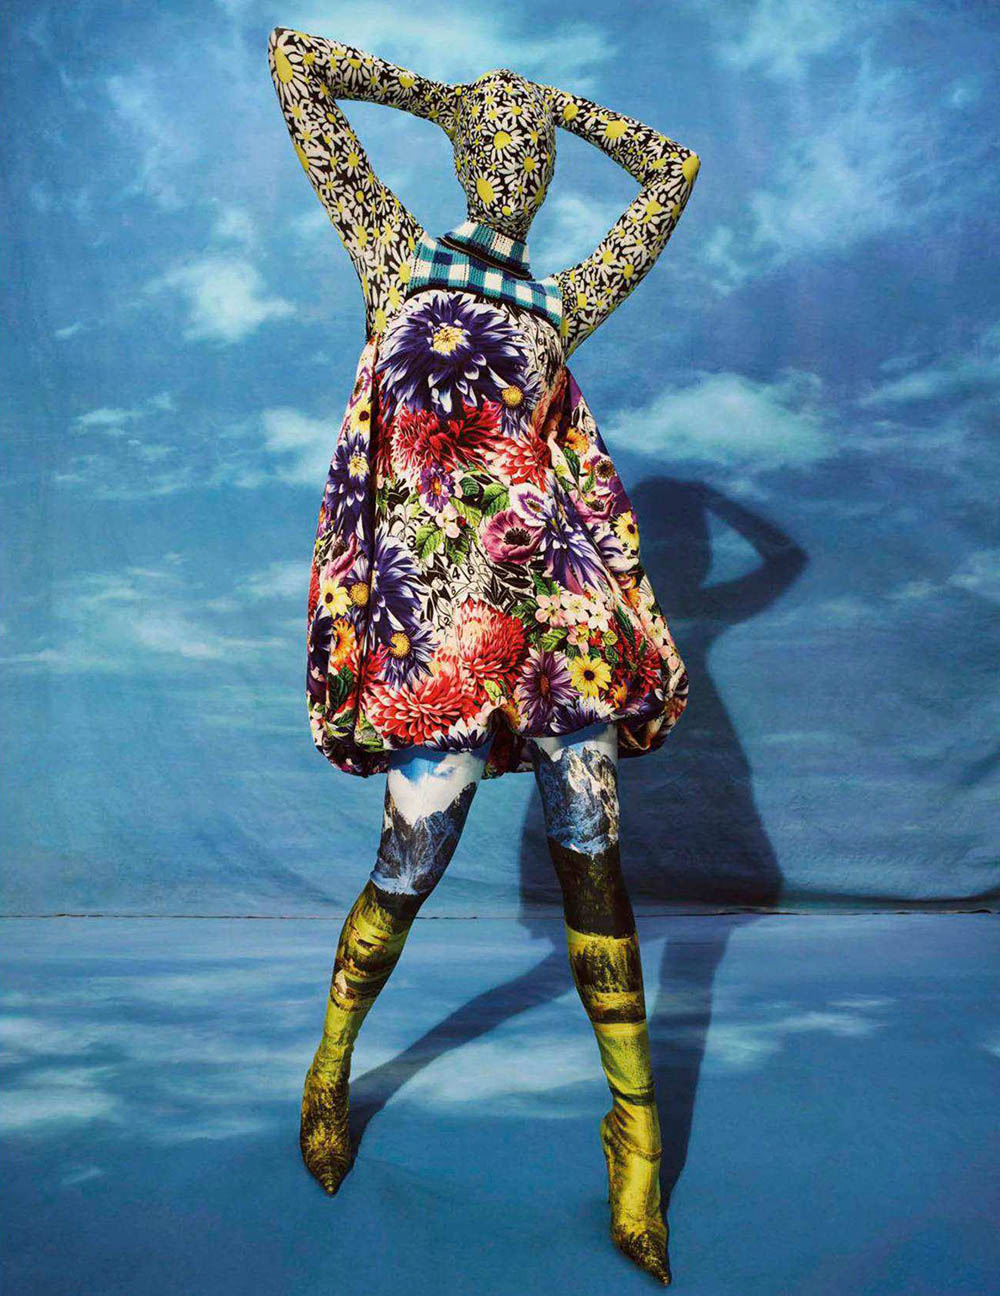 Karlie Kloss covers Vogue Spain June 2018 by Emma Summerton